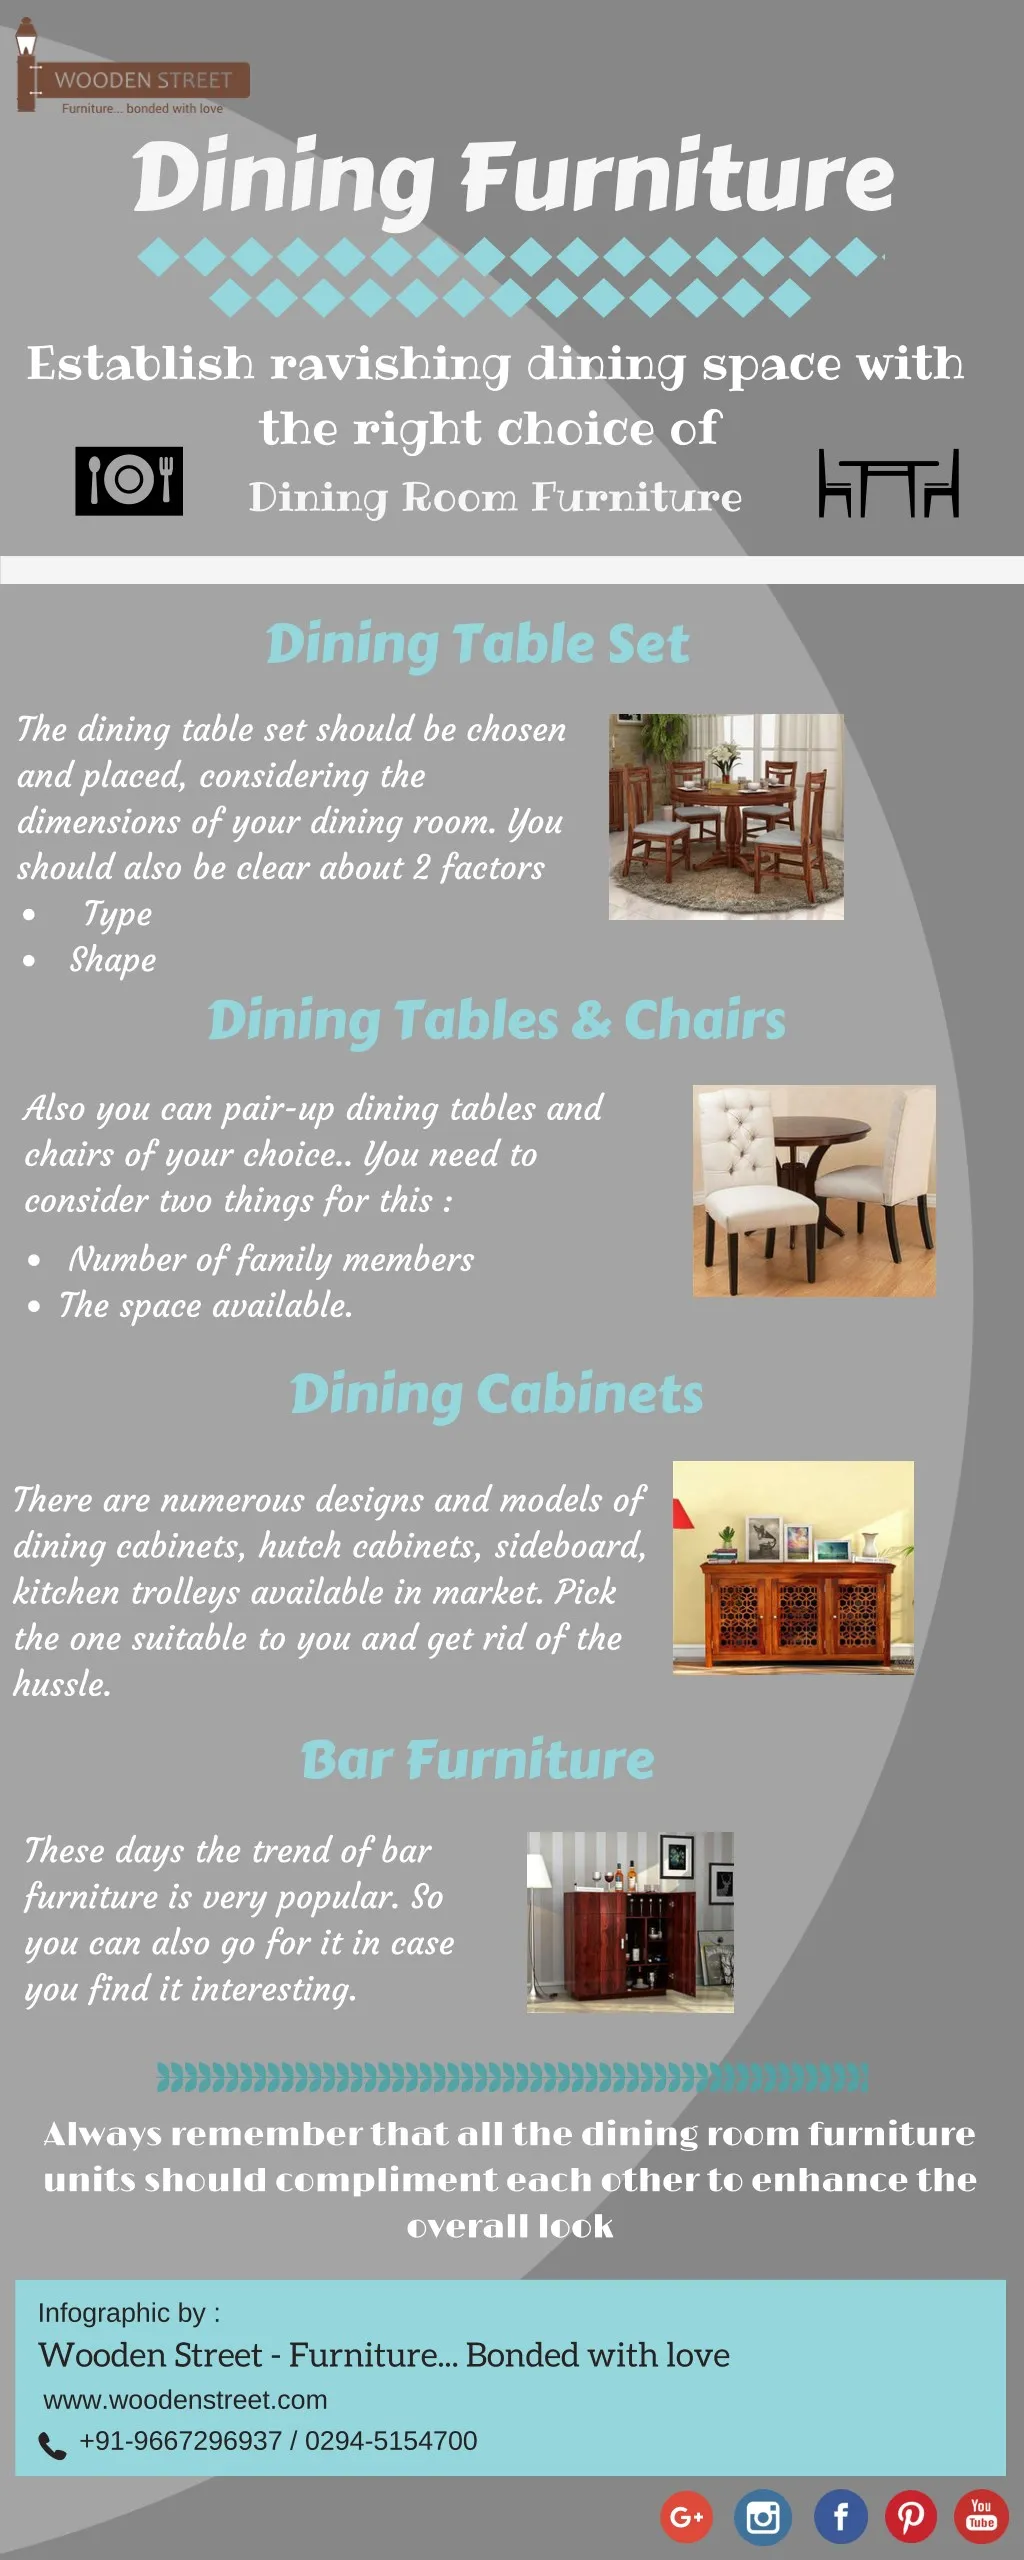 dining furniture